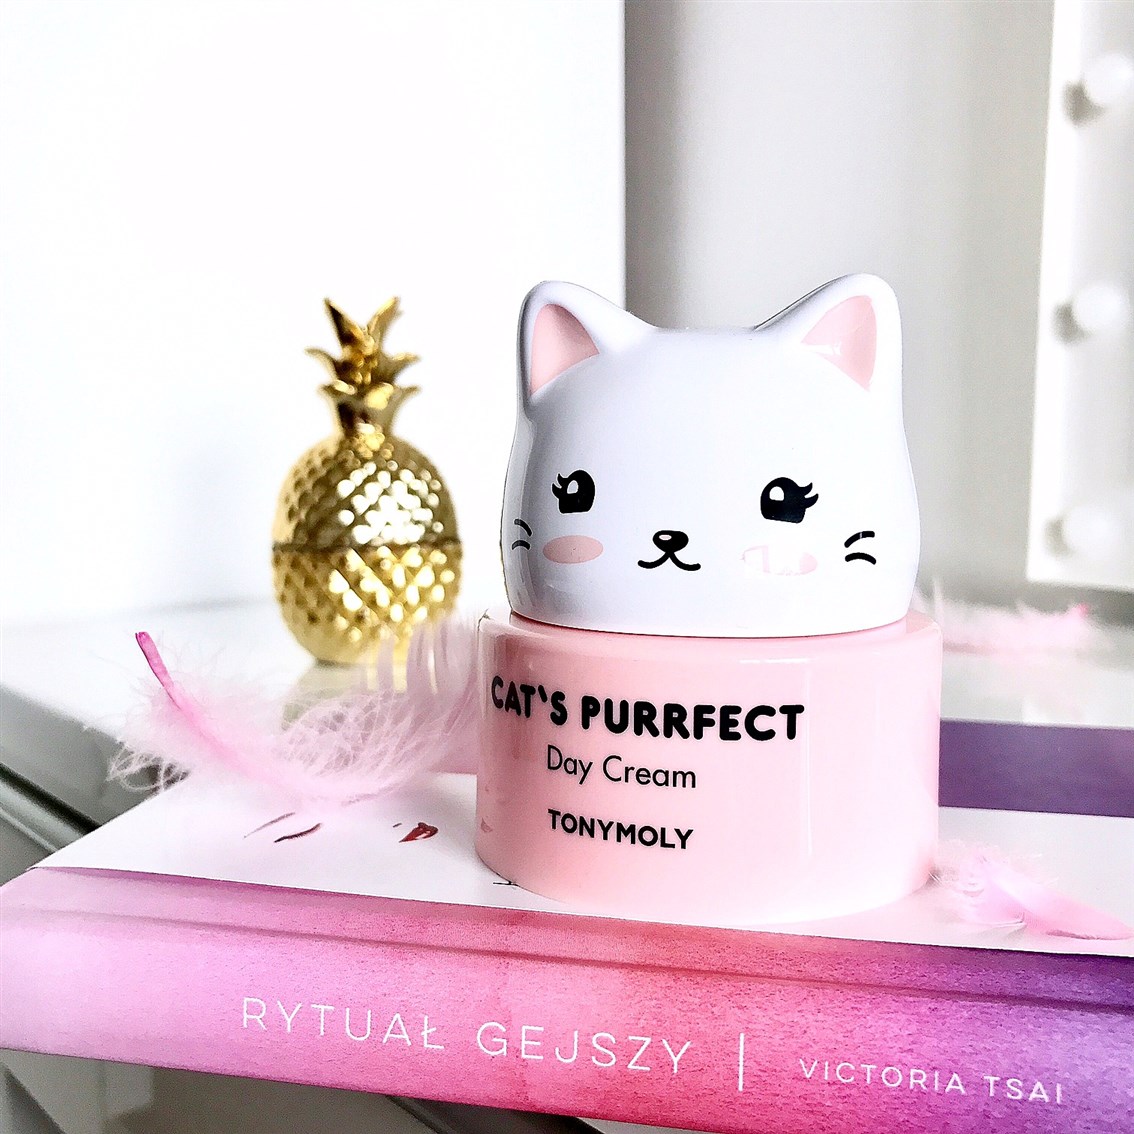 Tonymoly Cat’s Purrfect Day Cream